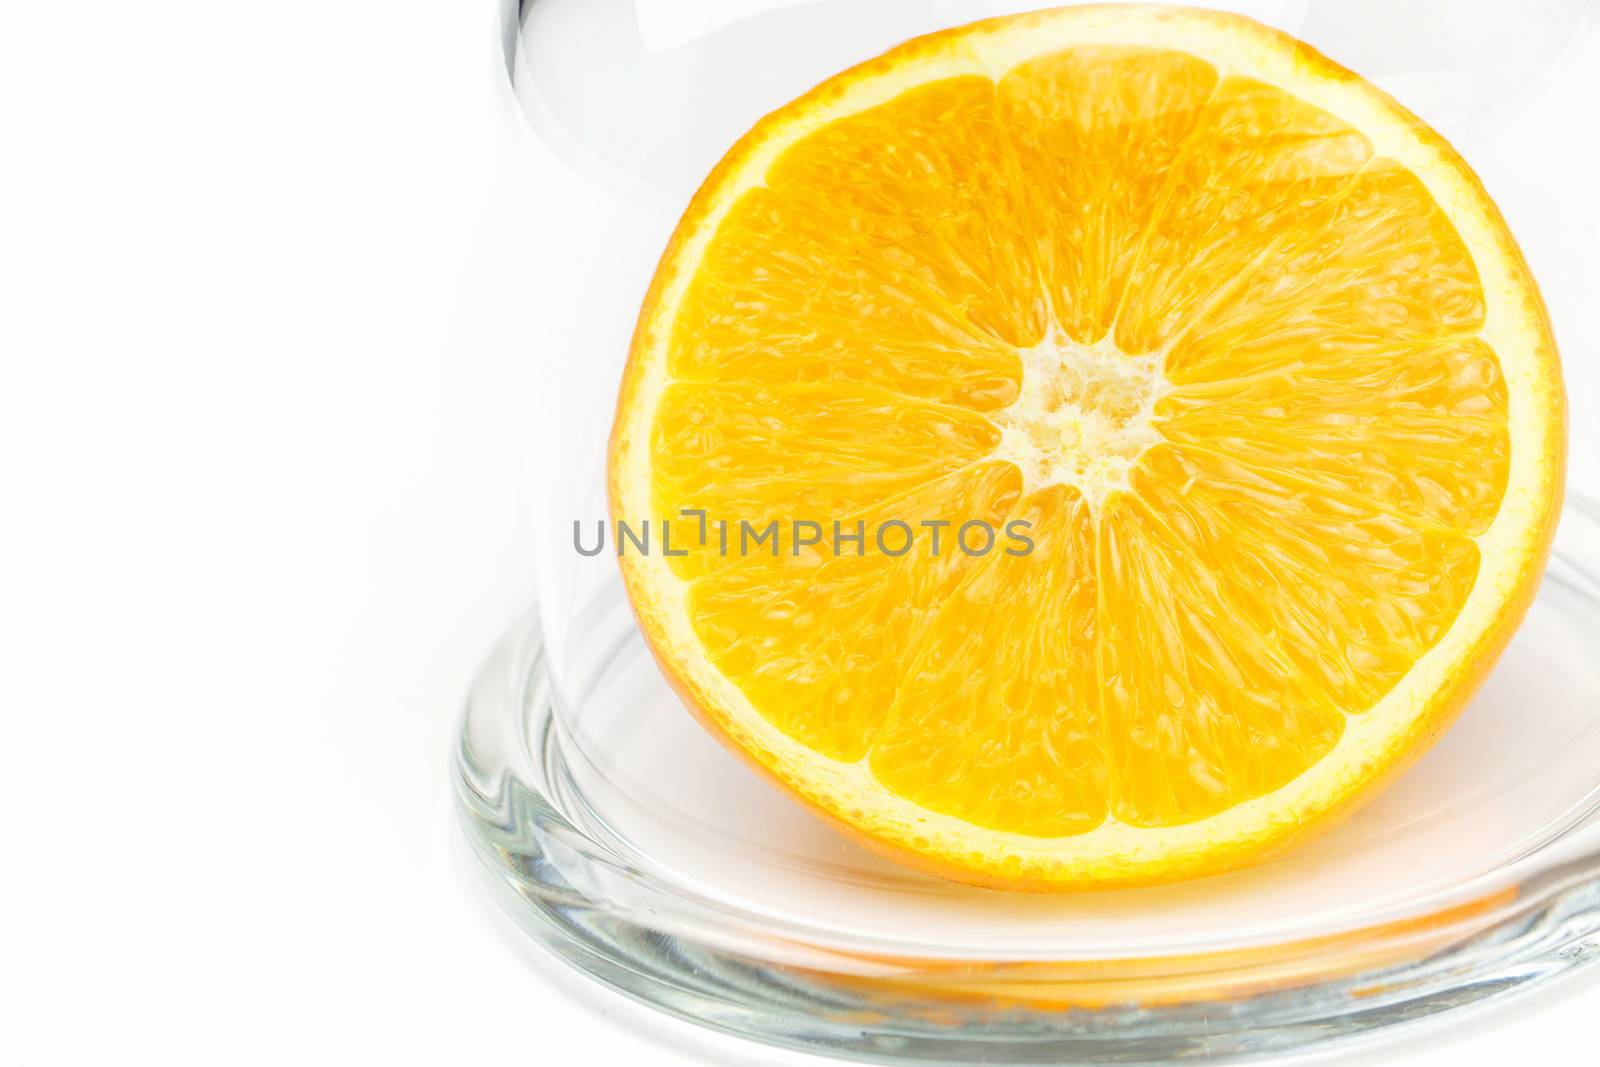 Slice of an orange by gorov108